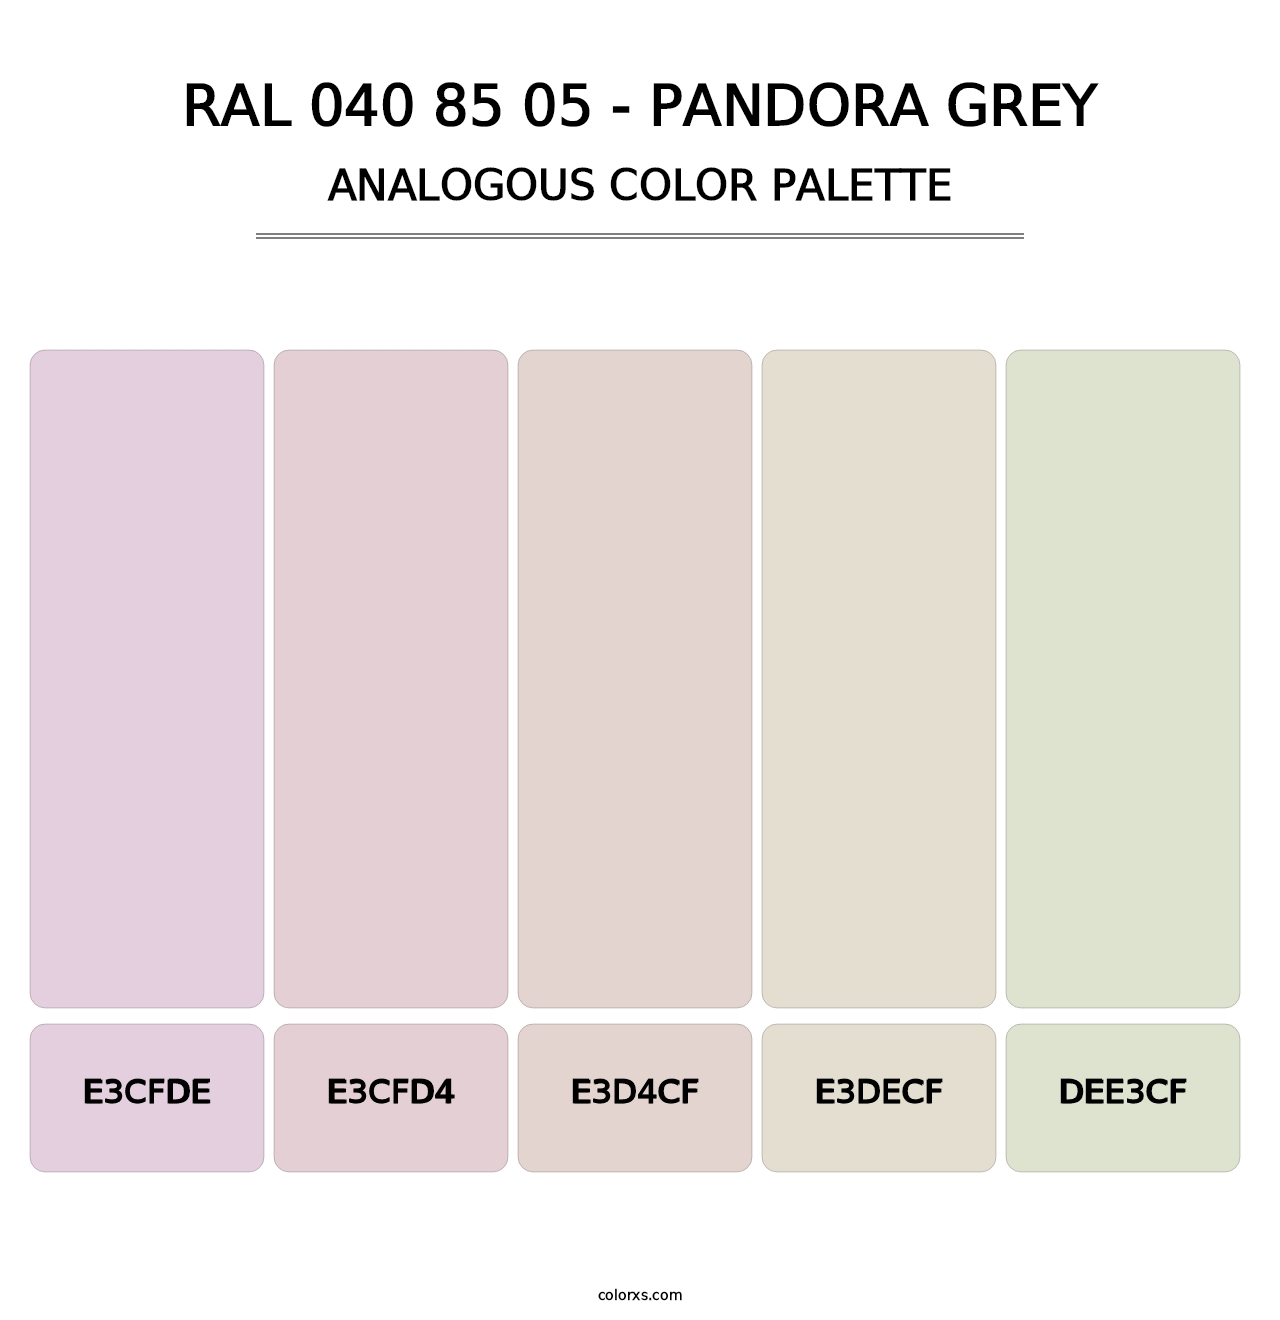 RAL 040 85 05 - Pandora Grey - Analogous Color Palette